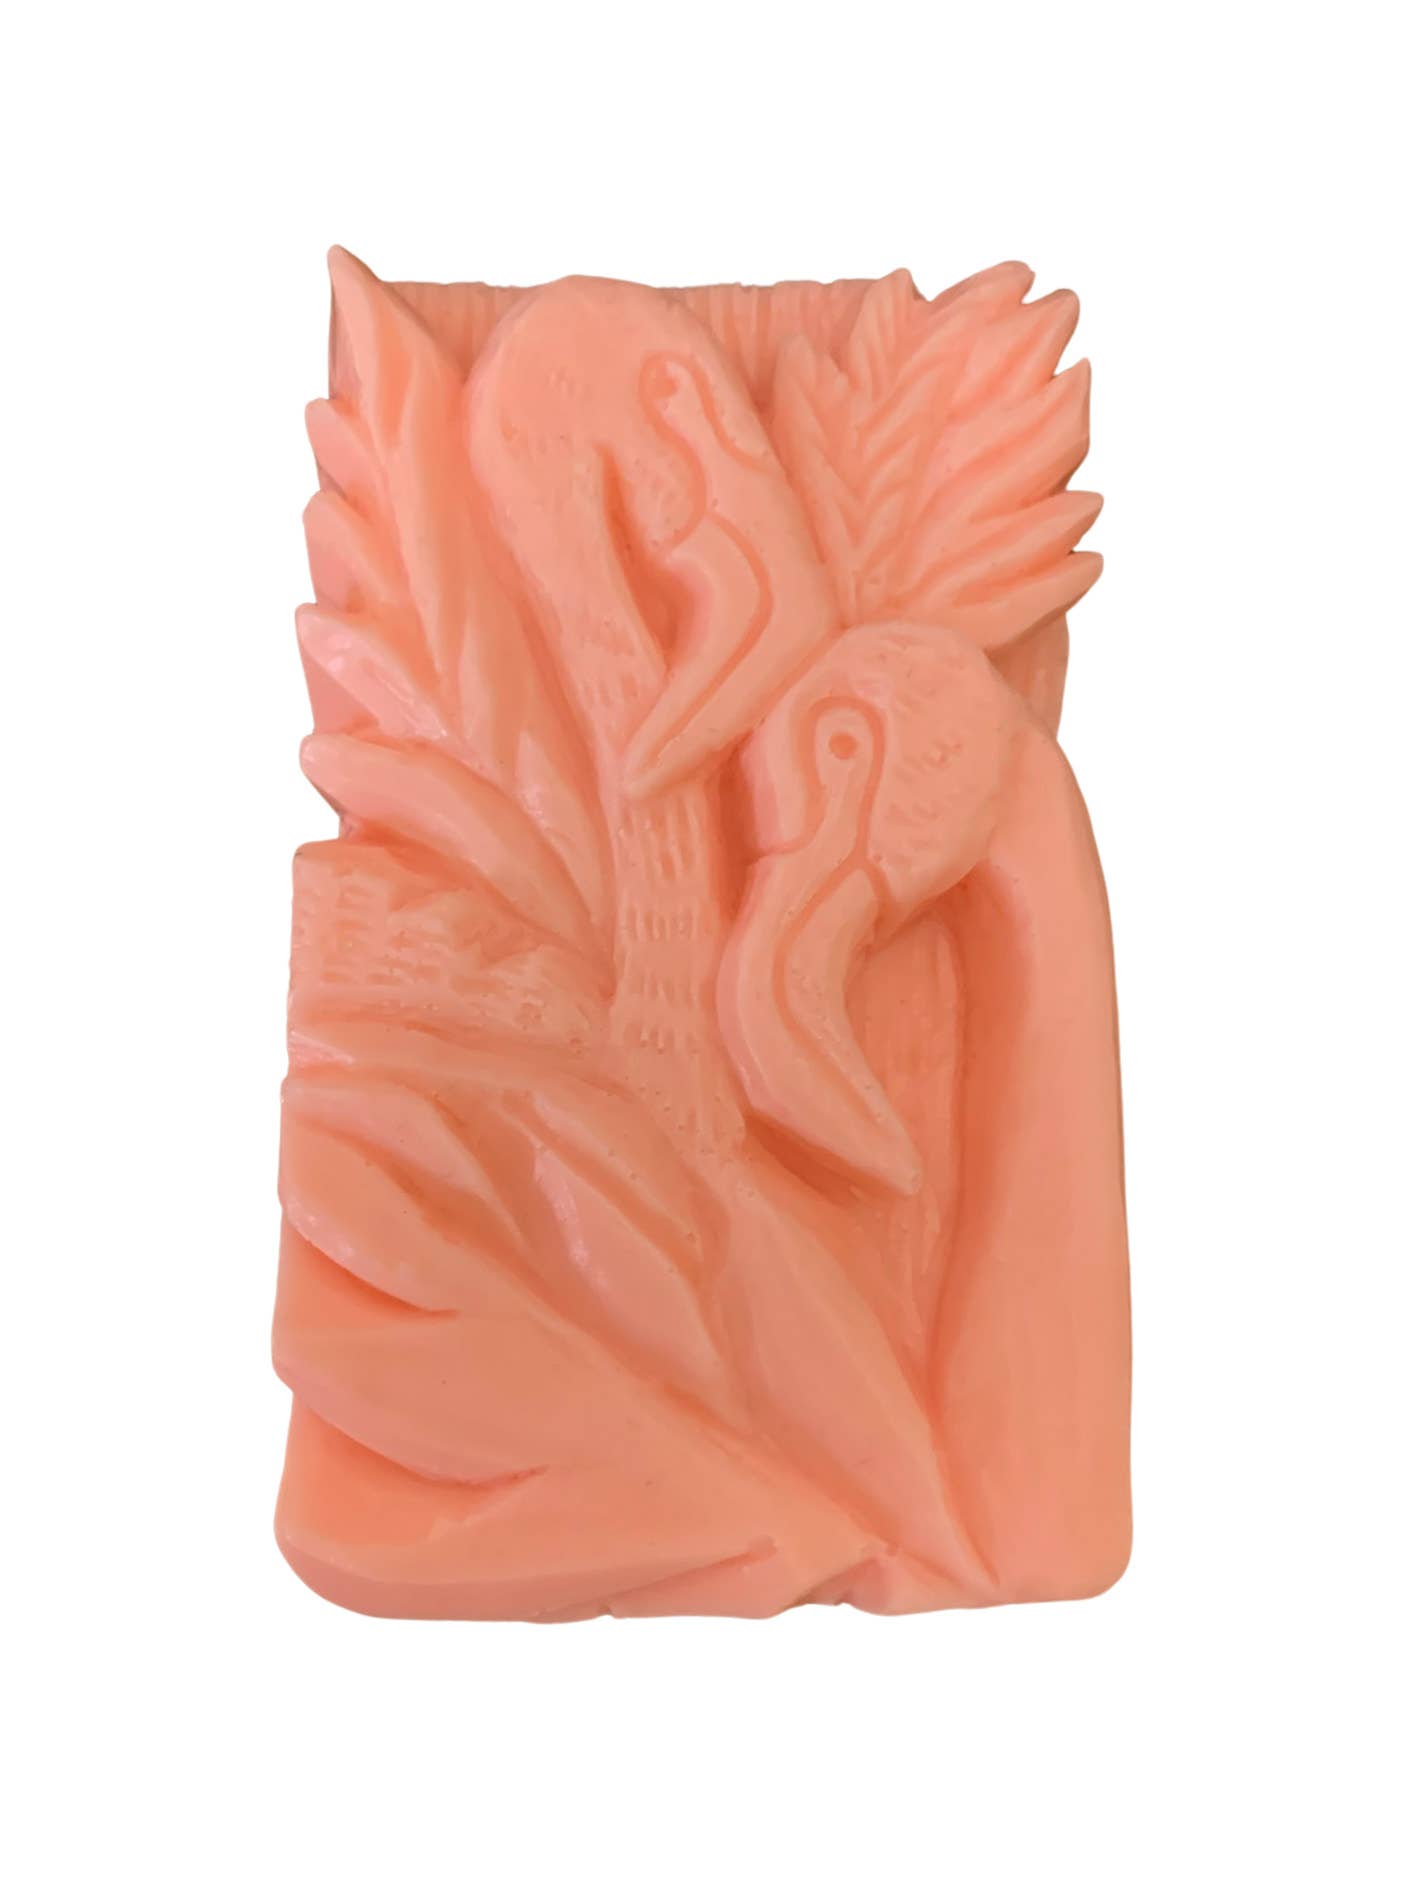 Flamingo Design Bar of Soap:  Tropical theme - The Crowd Went Wild